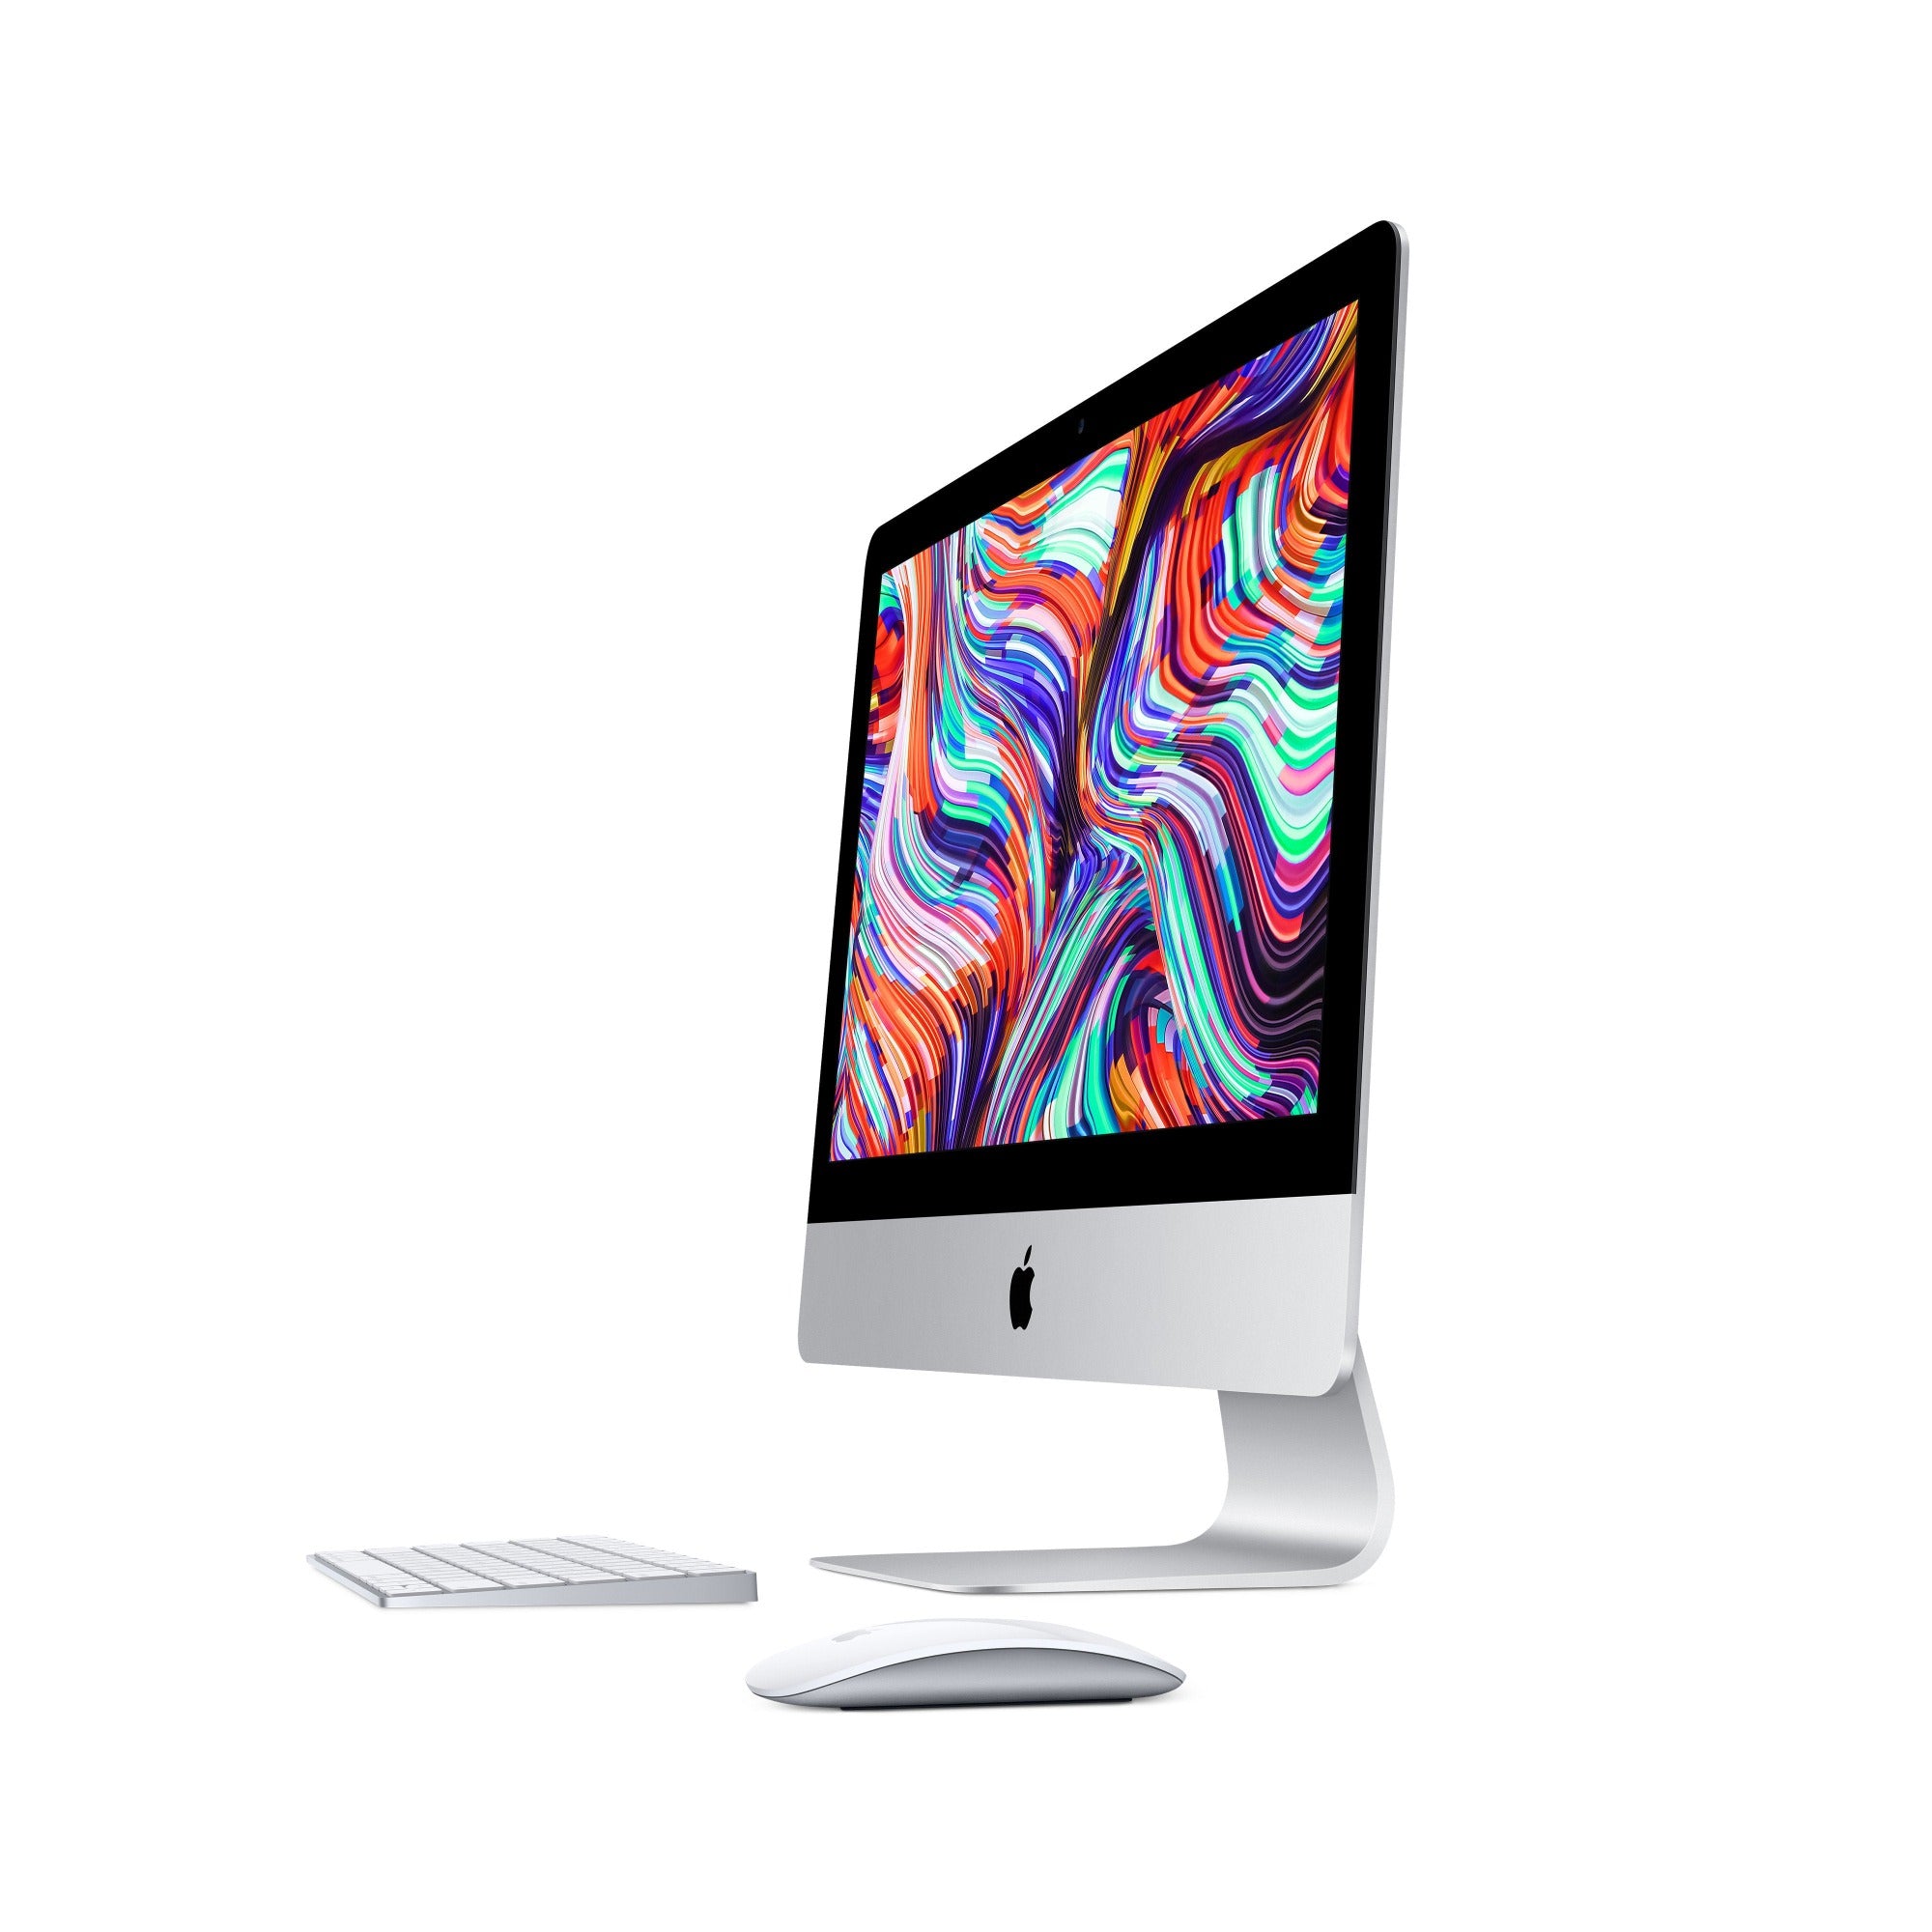 21.5-inch iMac with Retina Display